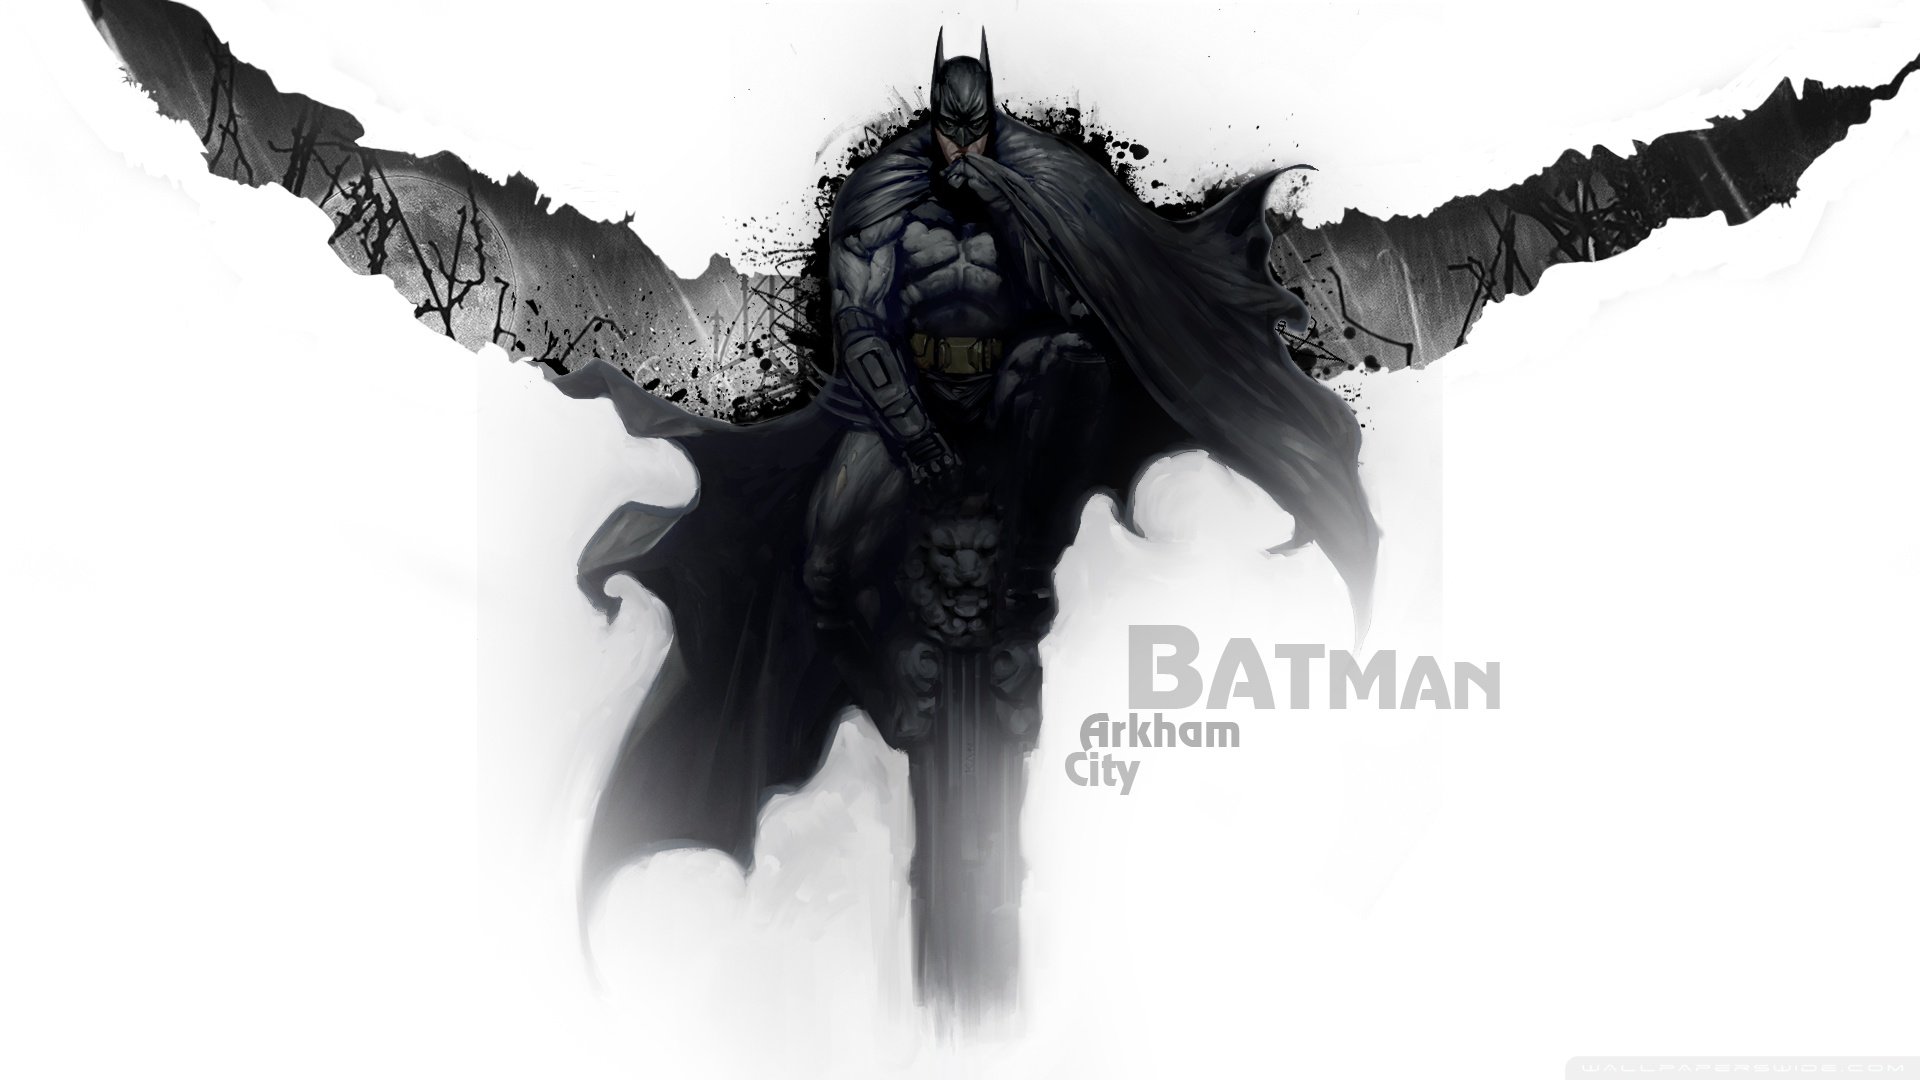 Best Batman: Arkham City wallpaper ID:300178 for High Resolution full hd 1920x1080 PC